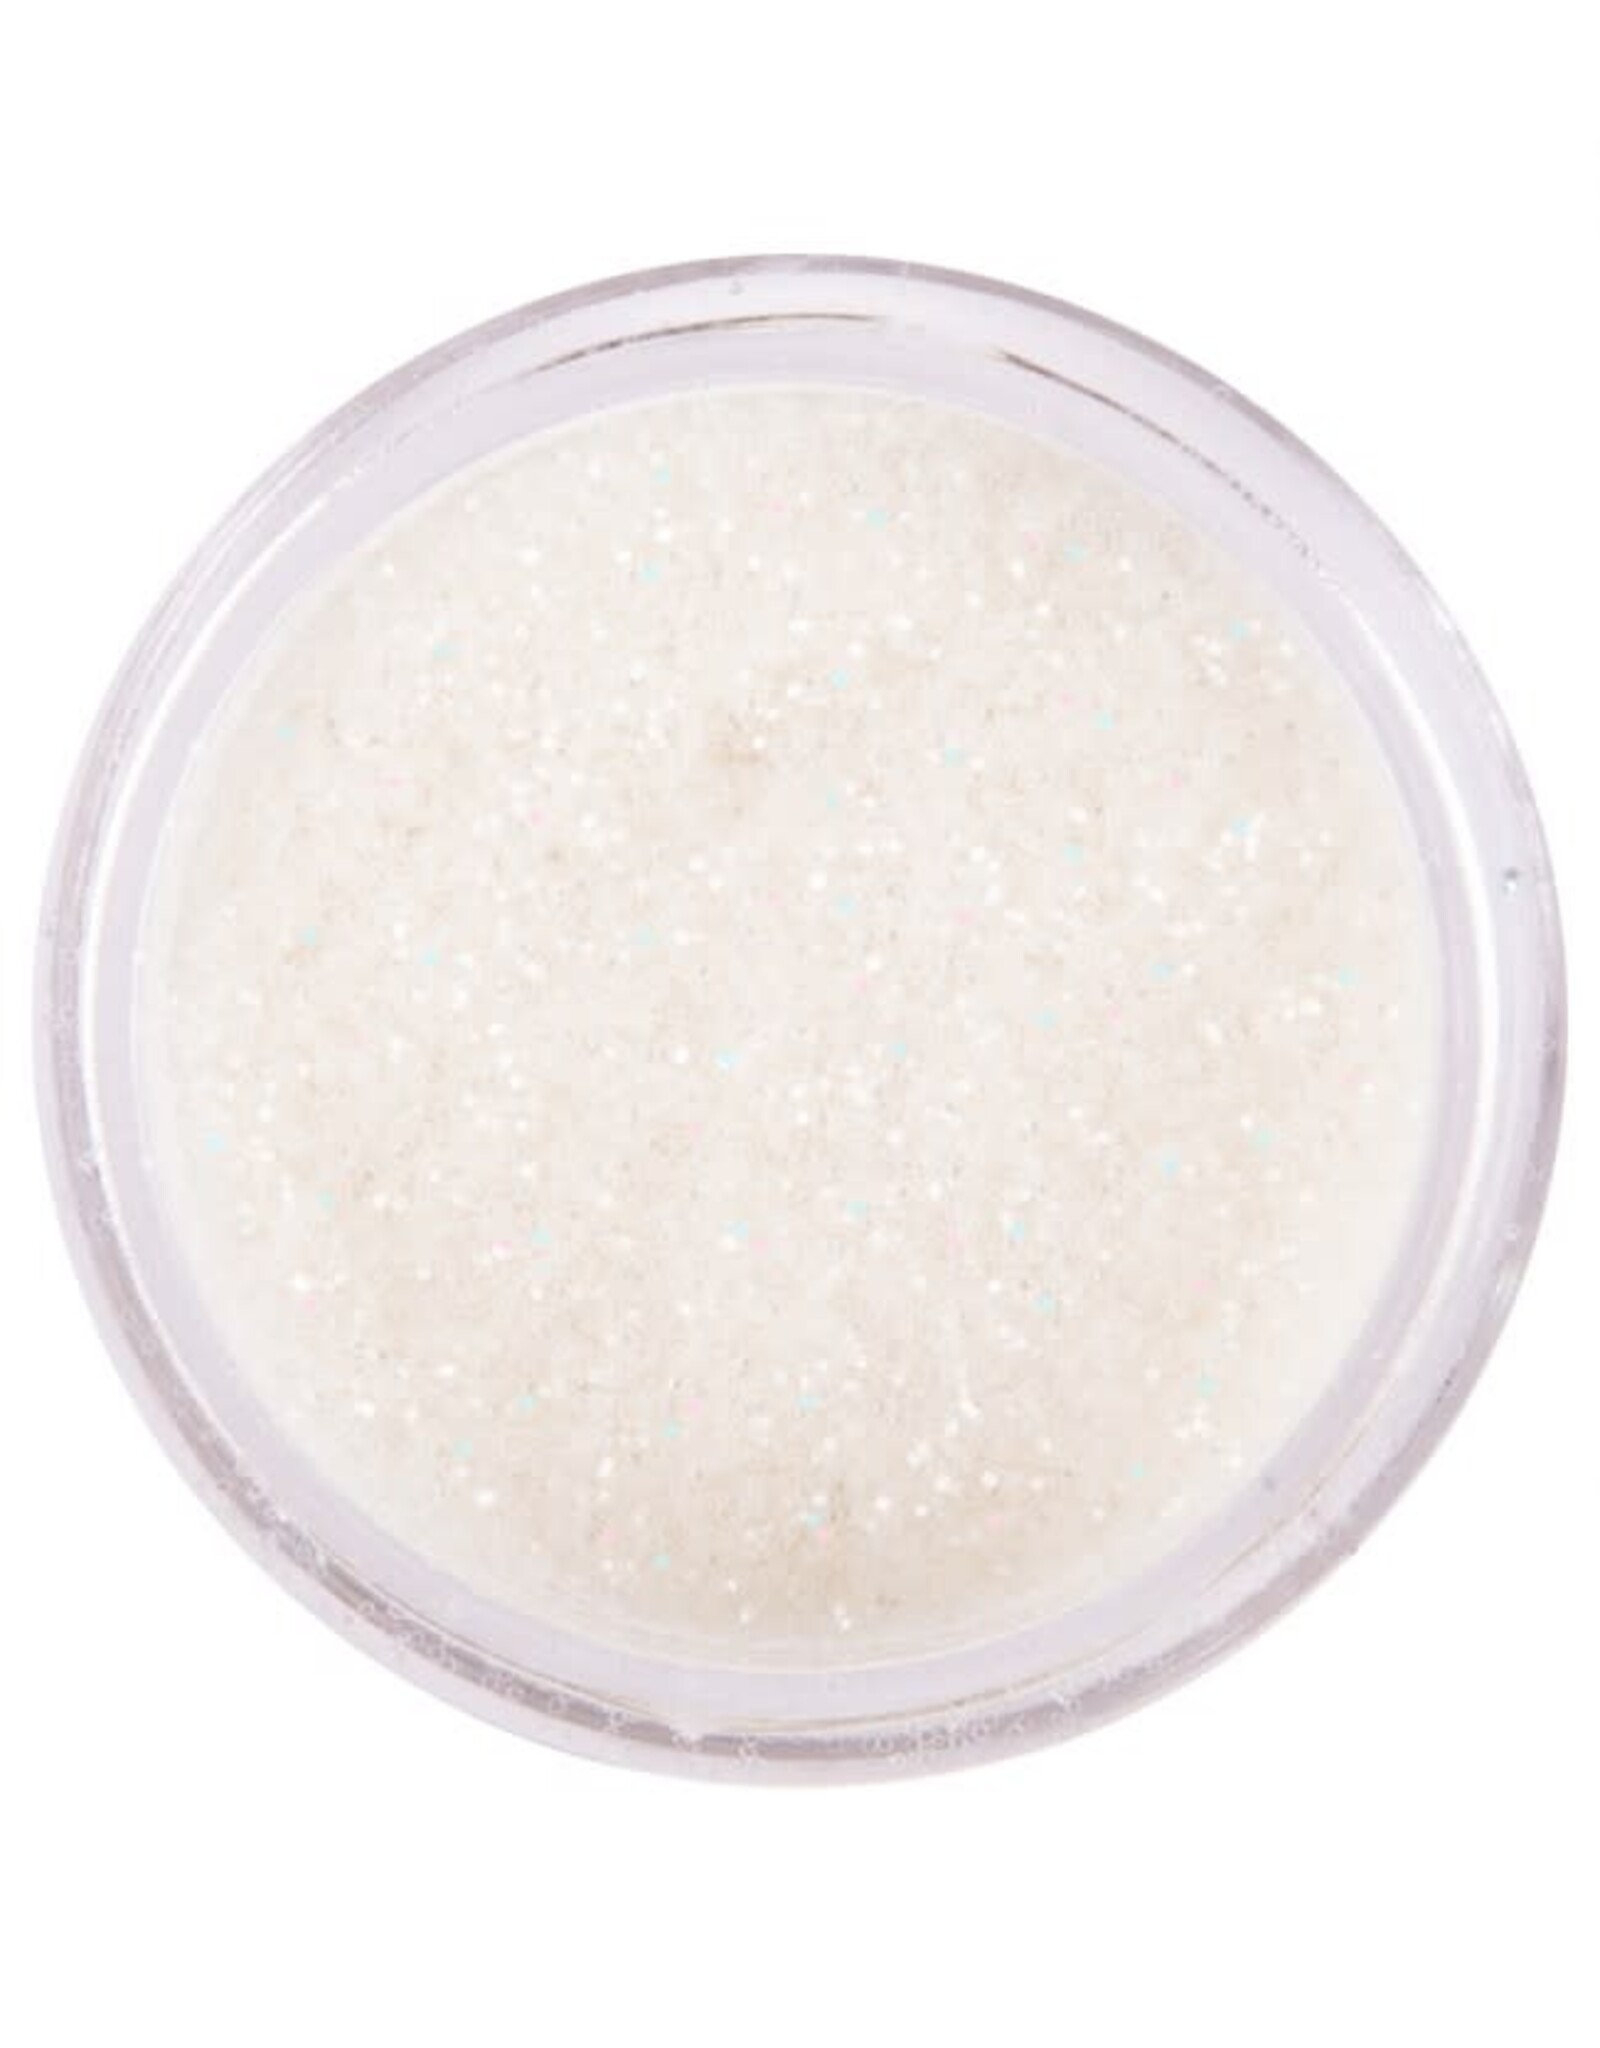 PartyXplosion PXP biodegradable powder glitter 2.5g pearl white